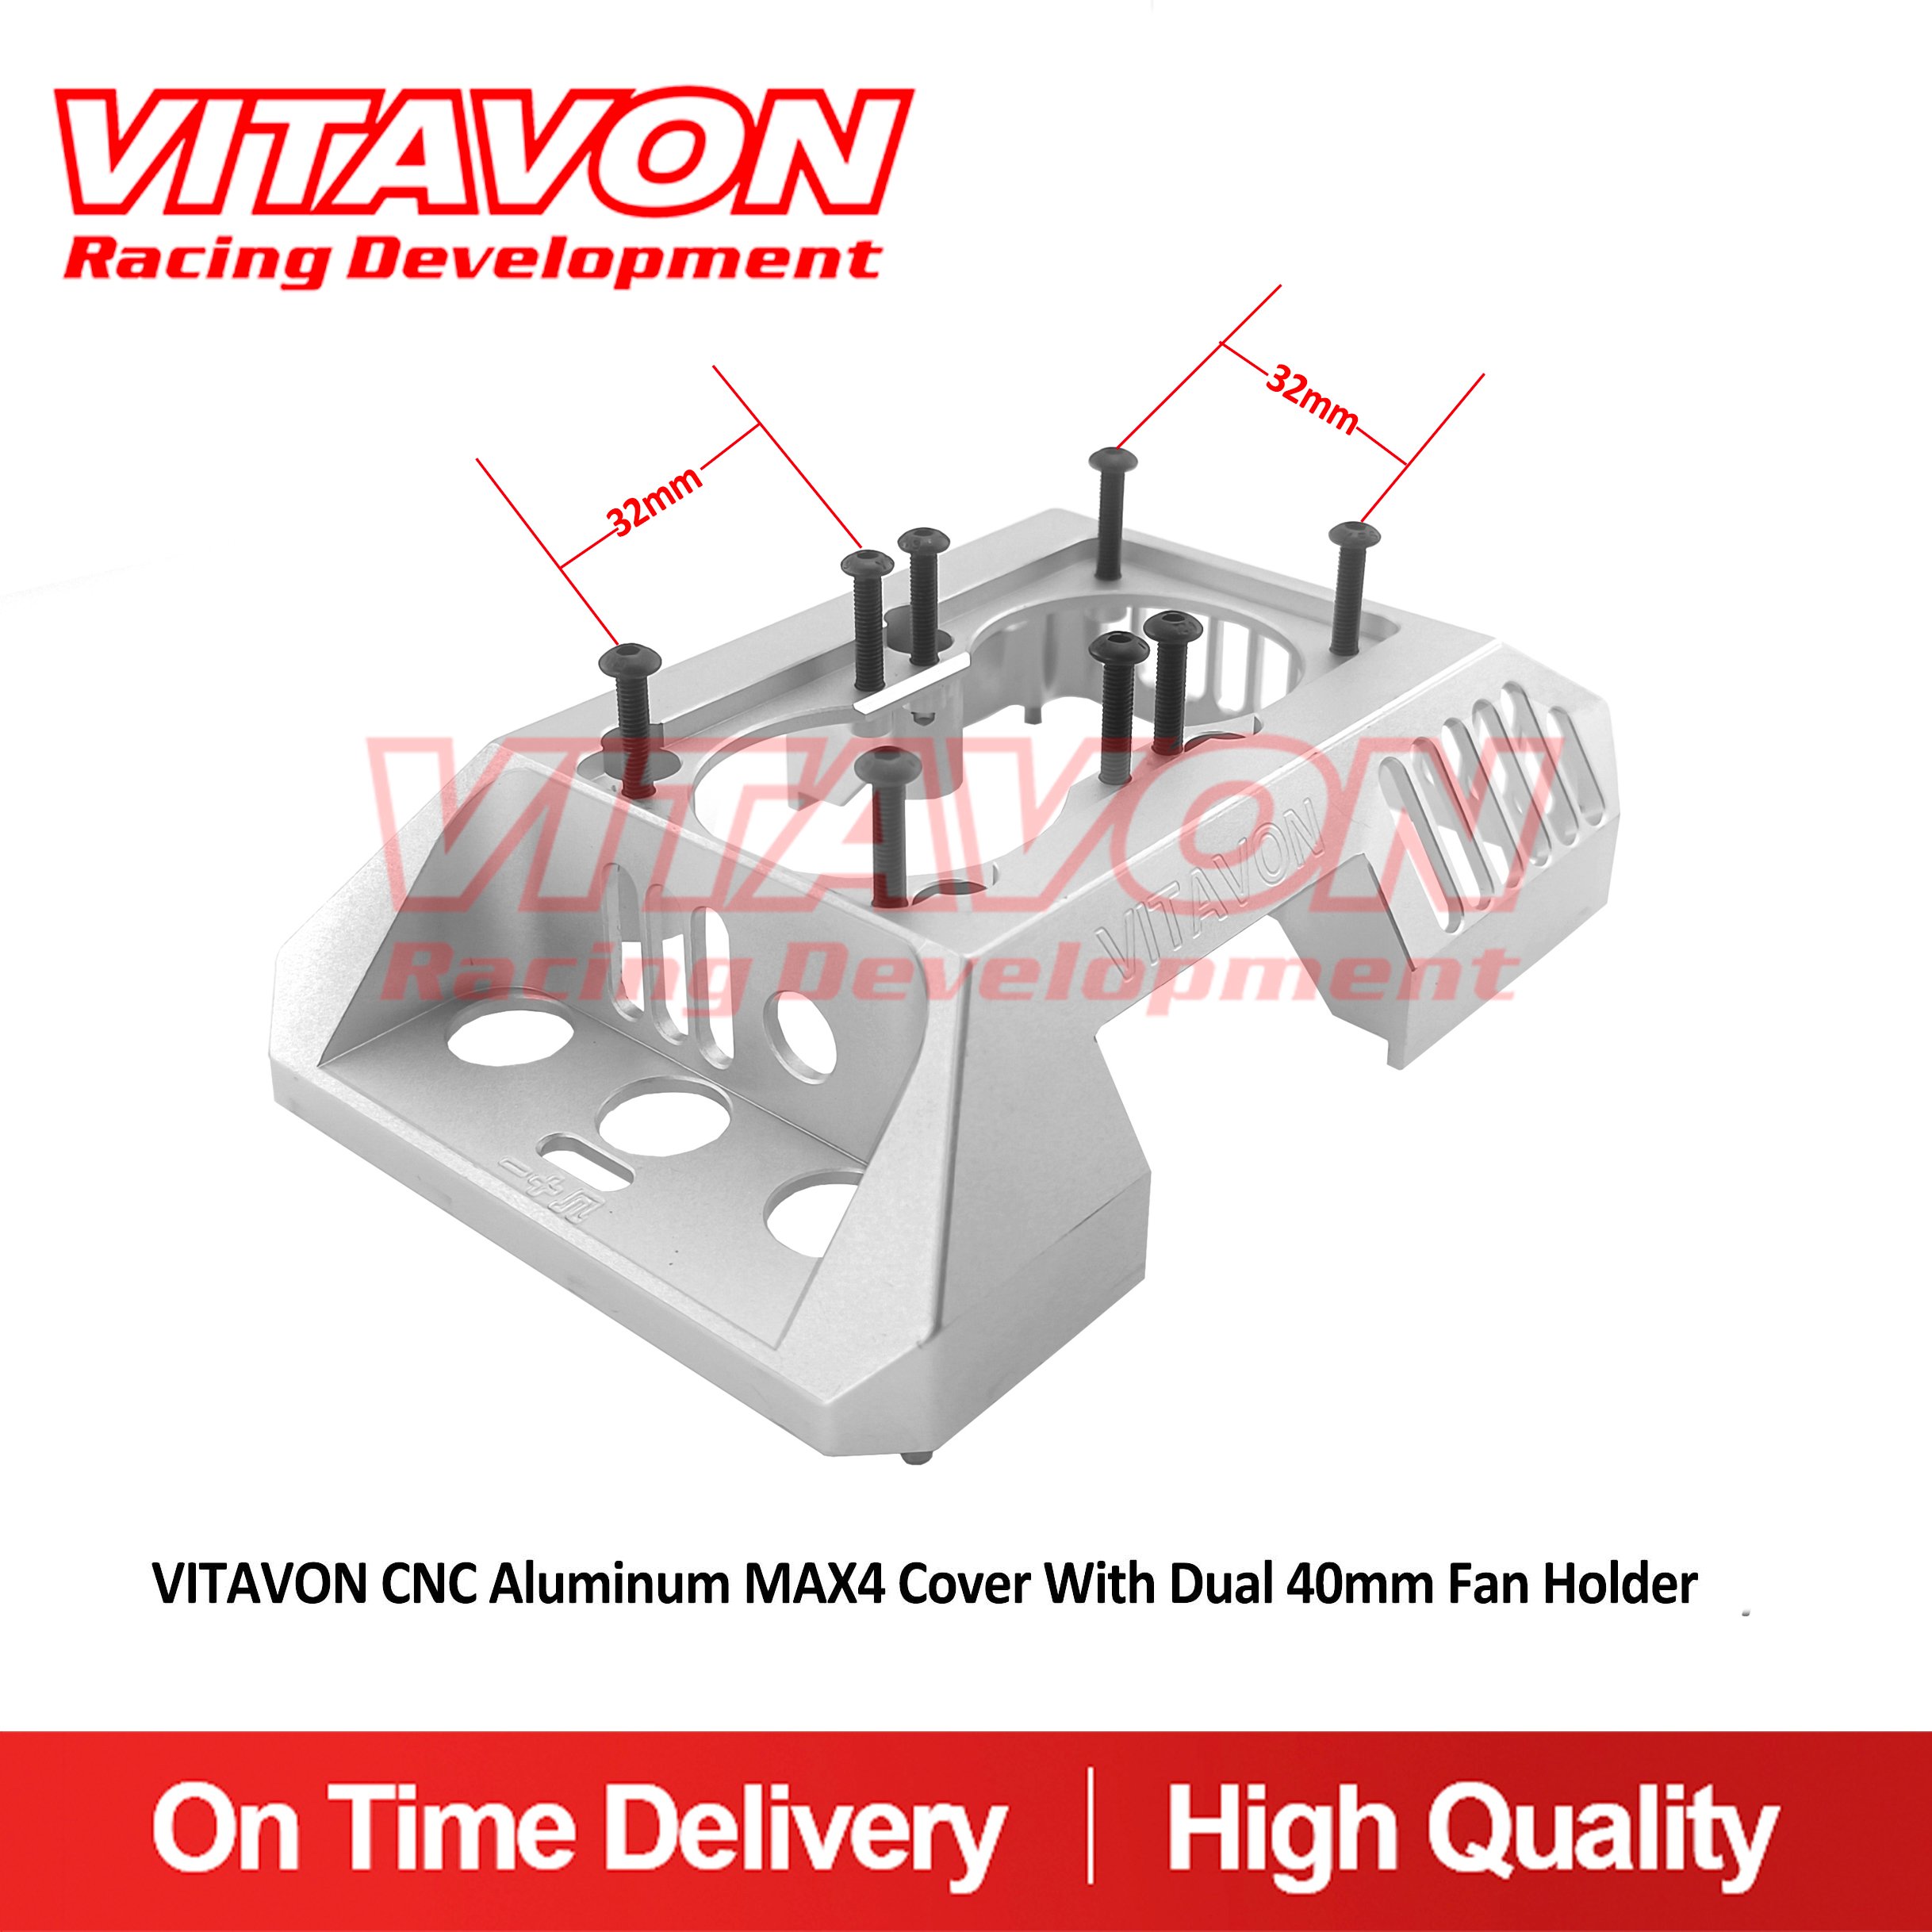 VITAVON CNC Aluminum MAX4 Cover With Dual 40mm Fan Holder